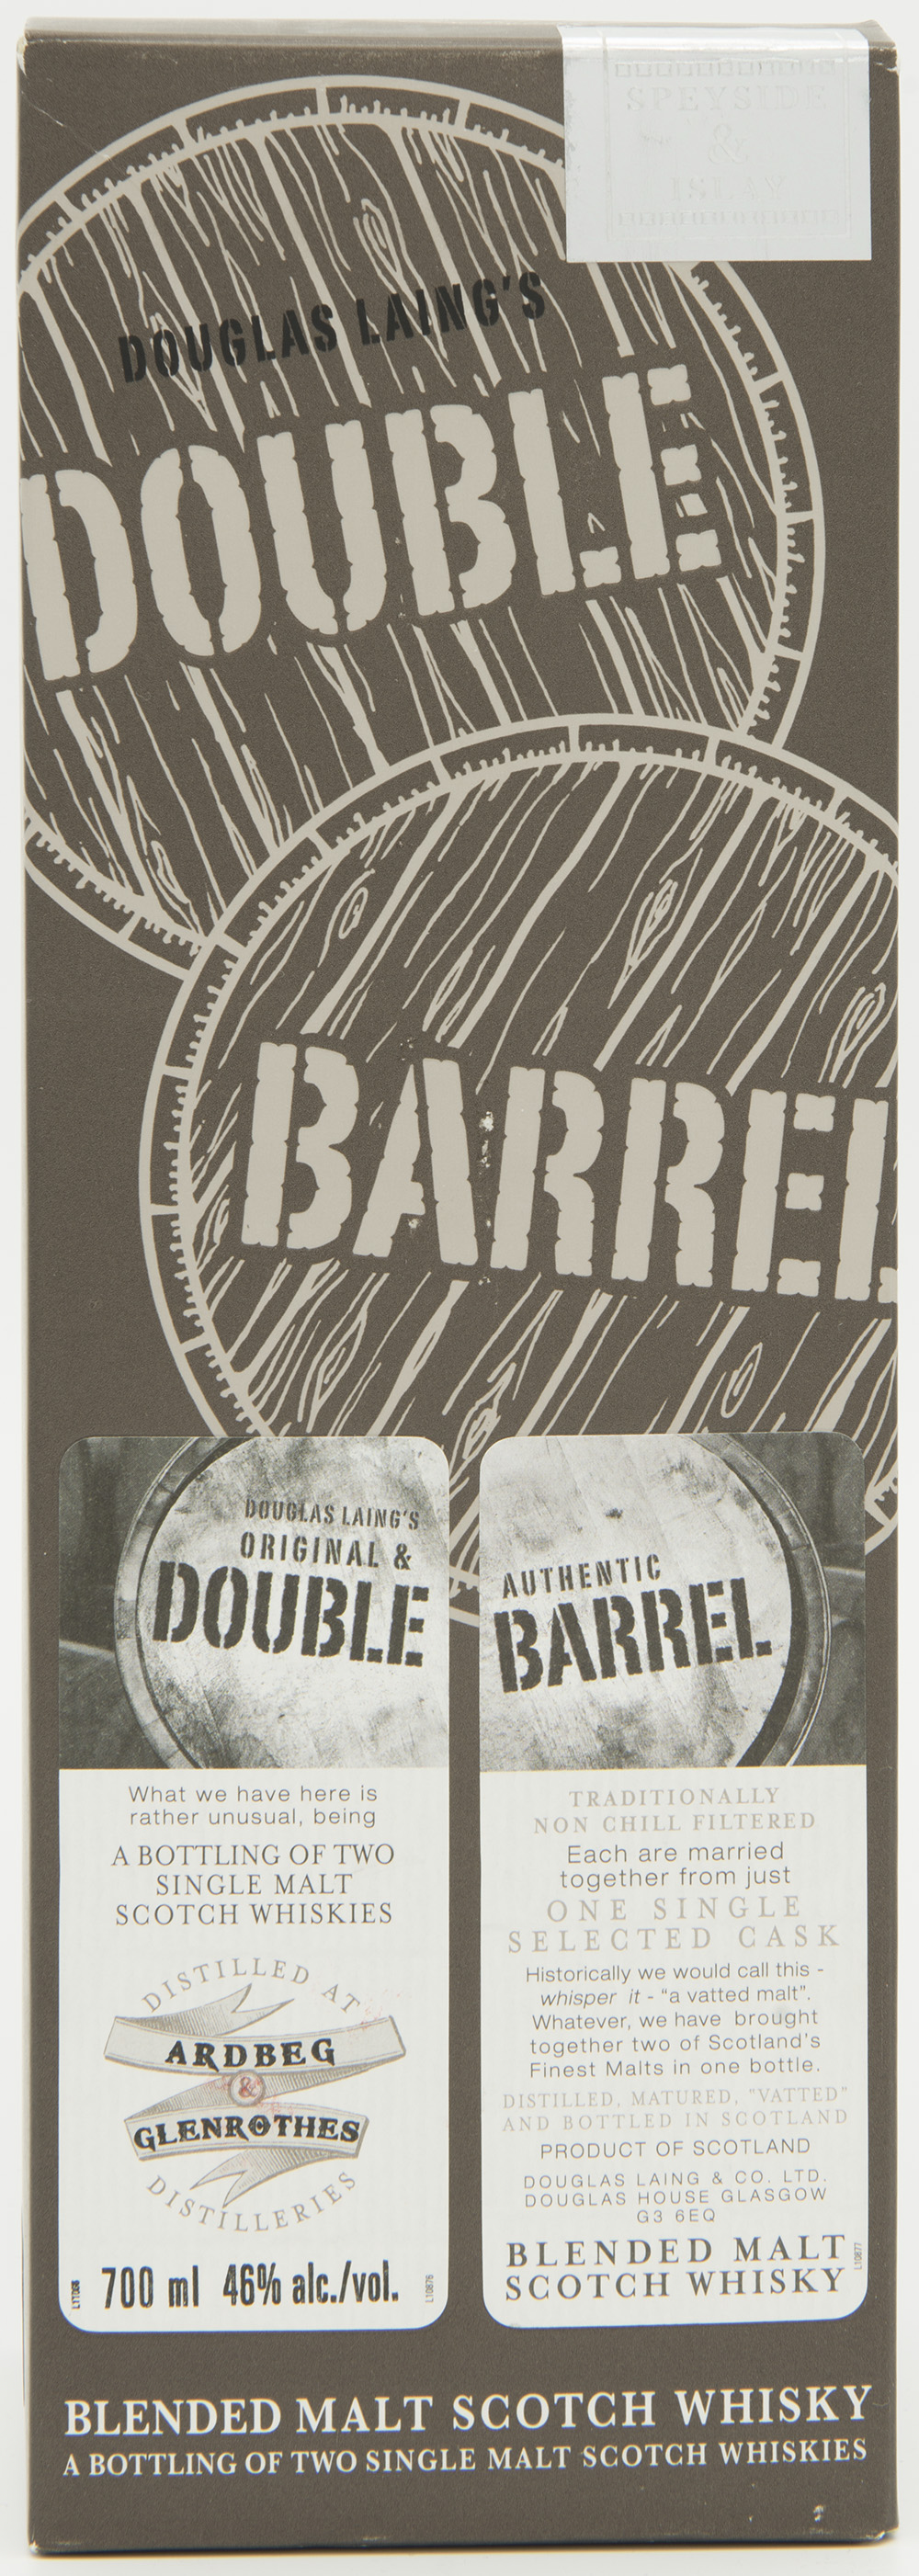 Billede: DSC_3676 Douglas Laing's Double Barrel - Ardbeg and Glenrothes- box front.jpg